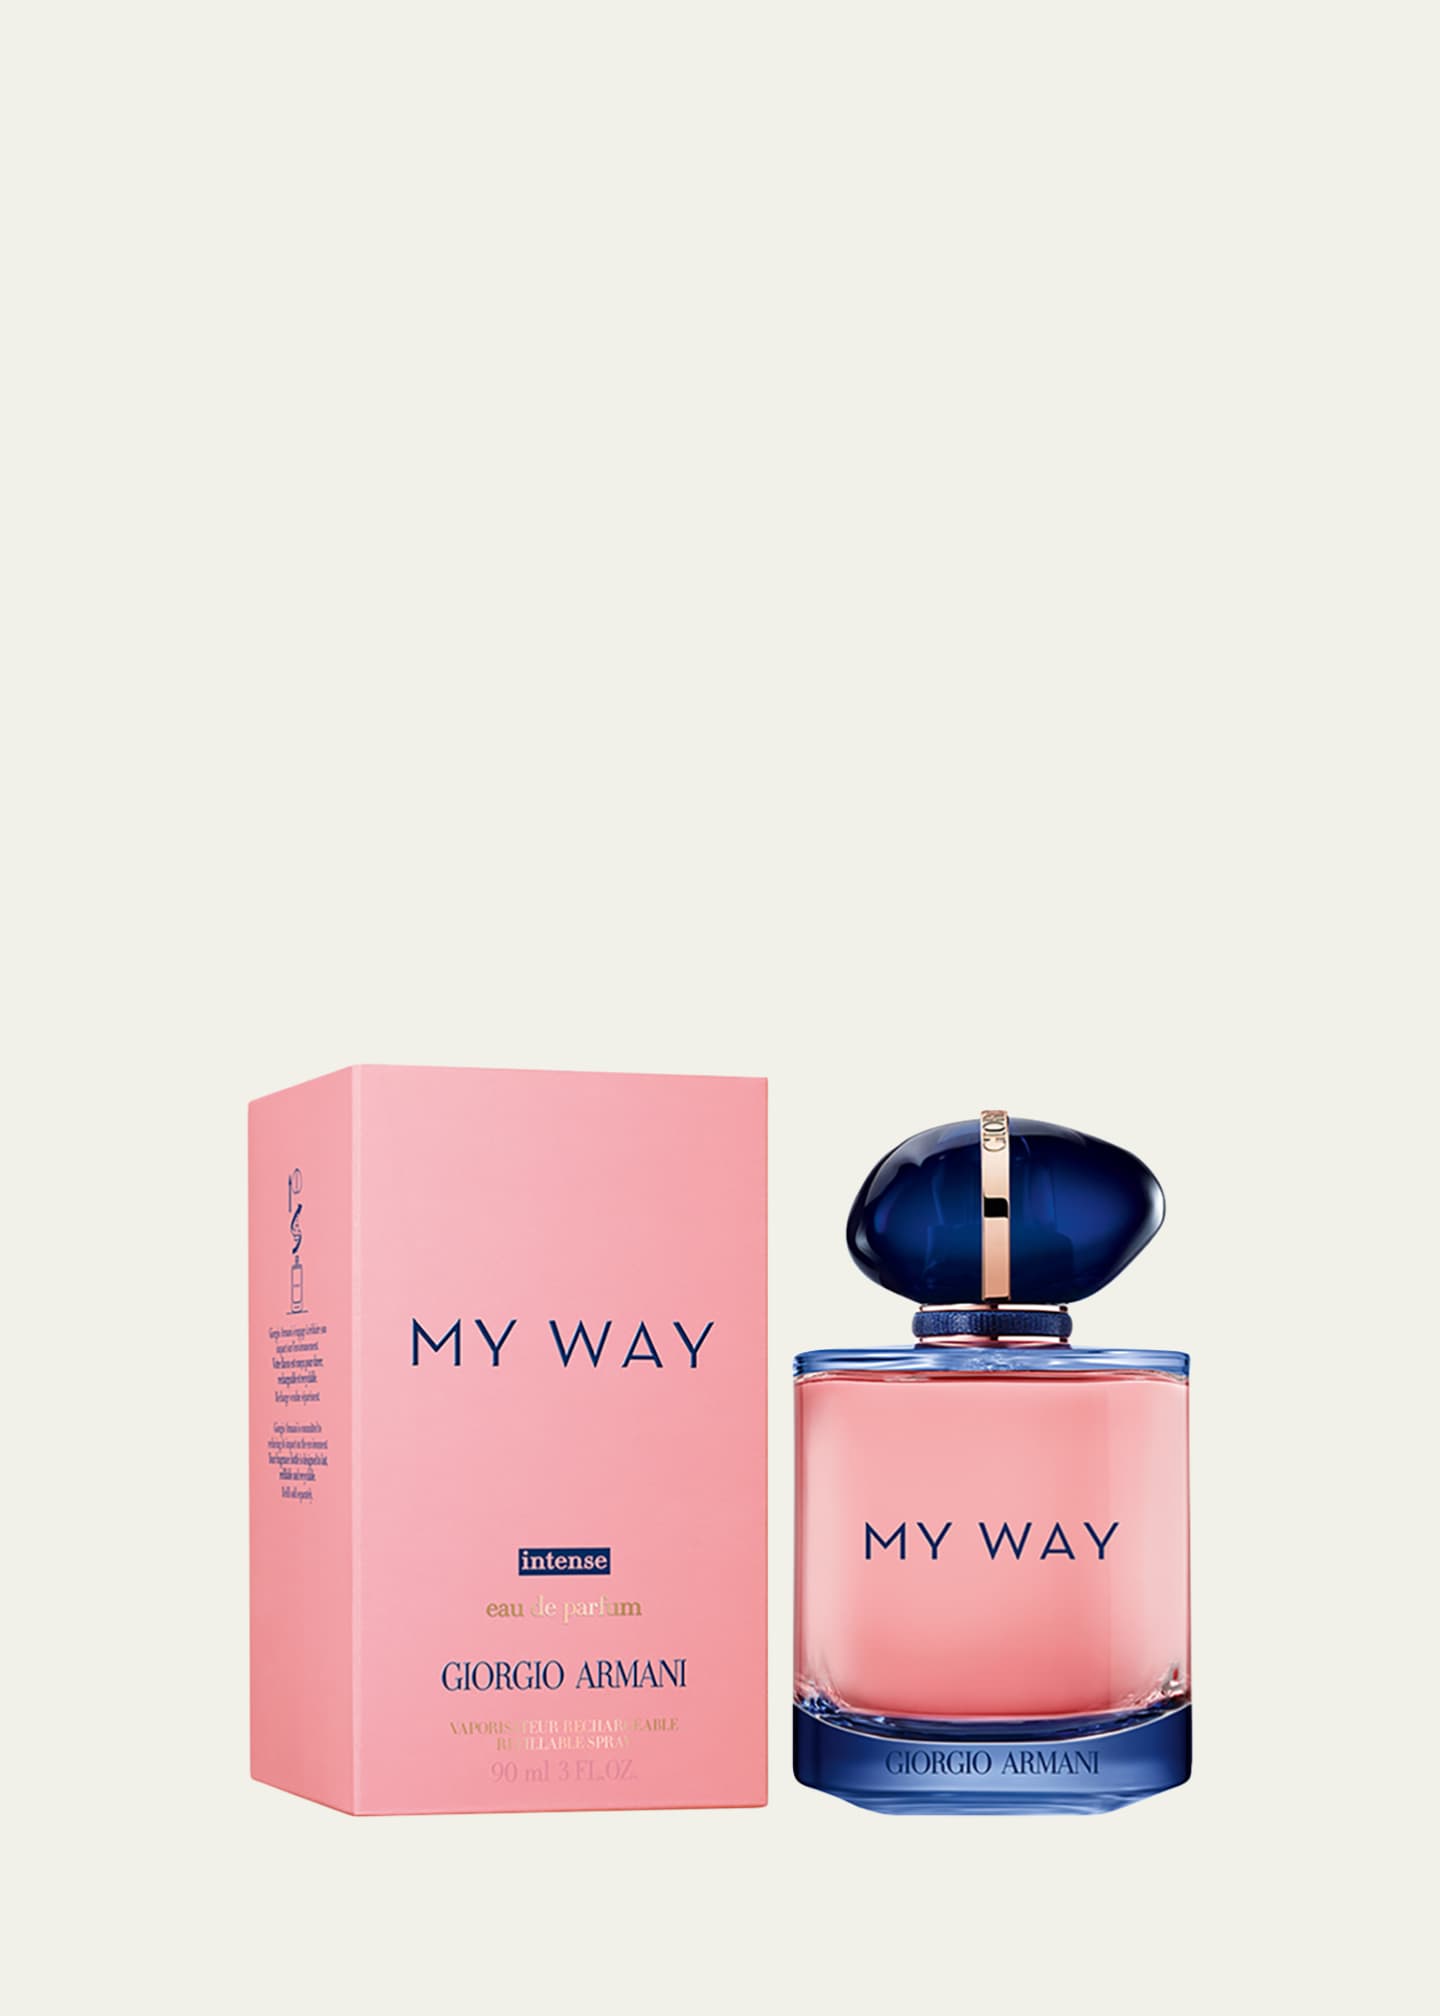 Armani My Way Parfum - 3.0 oz